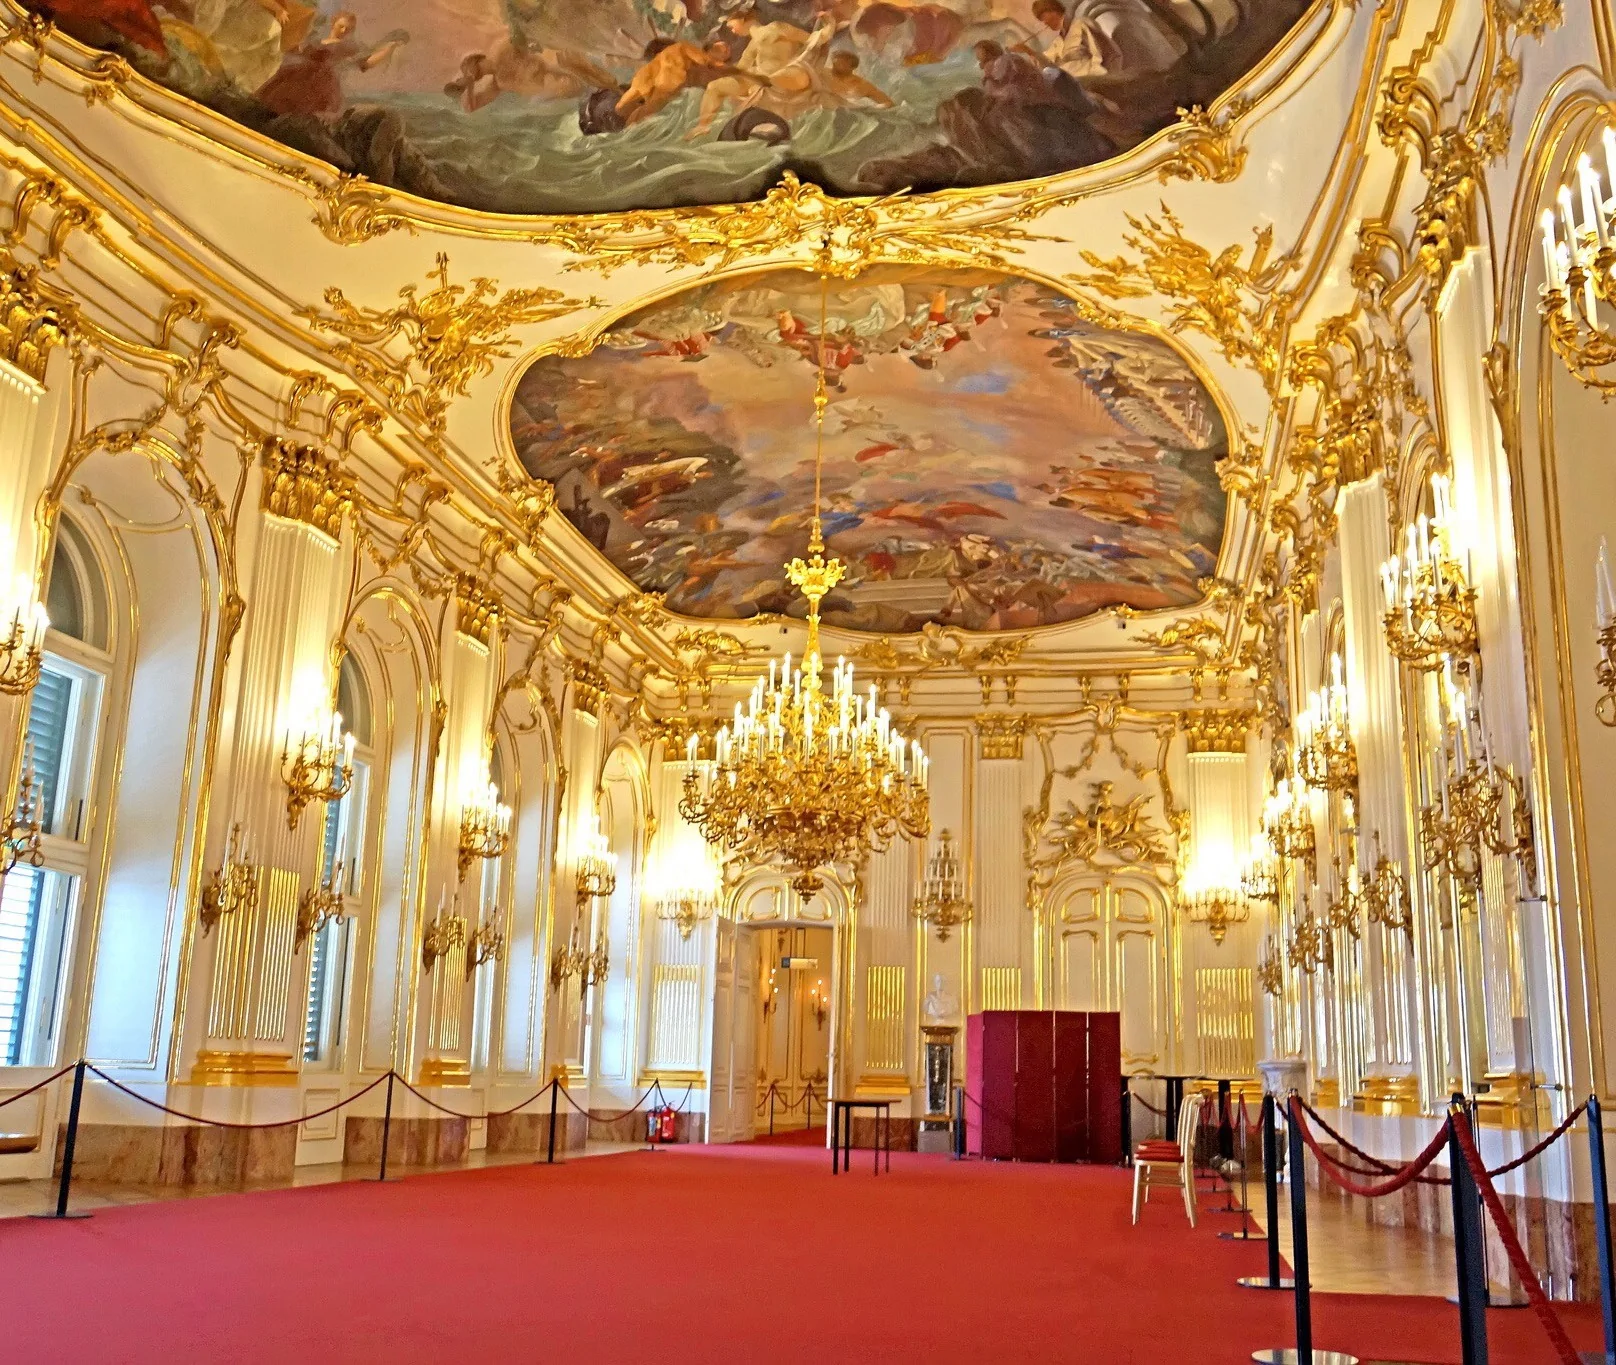 Schoenbrunn Palace, Vienna, Austria interior